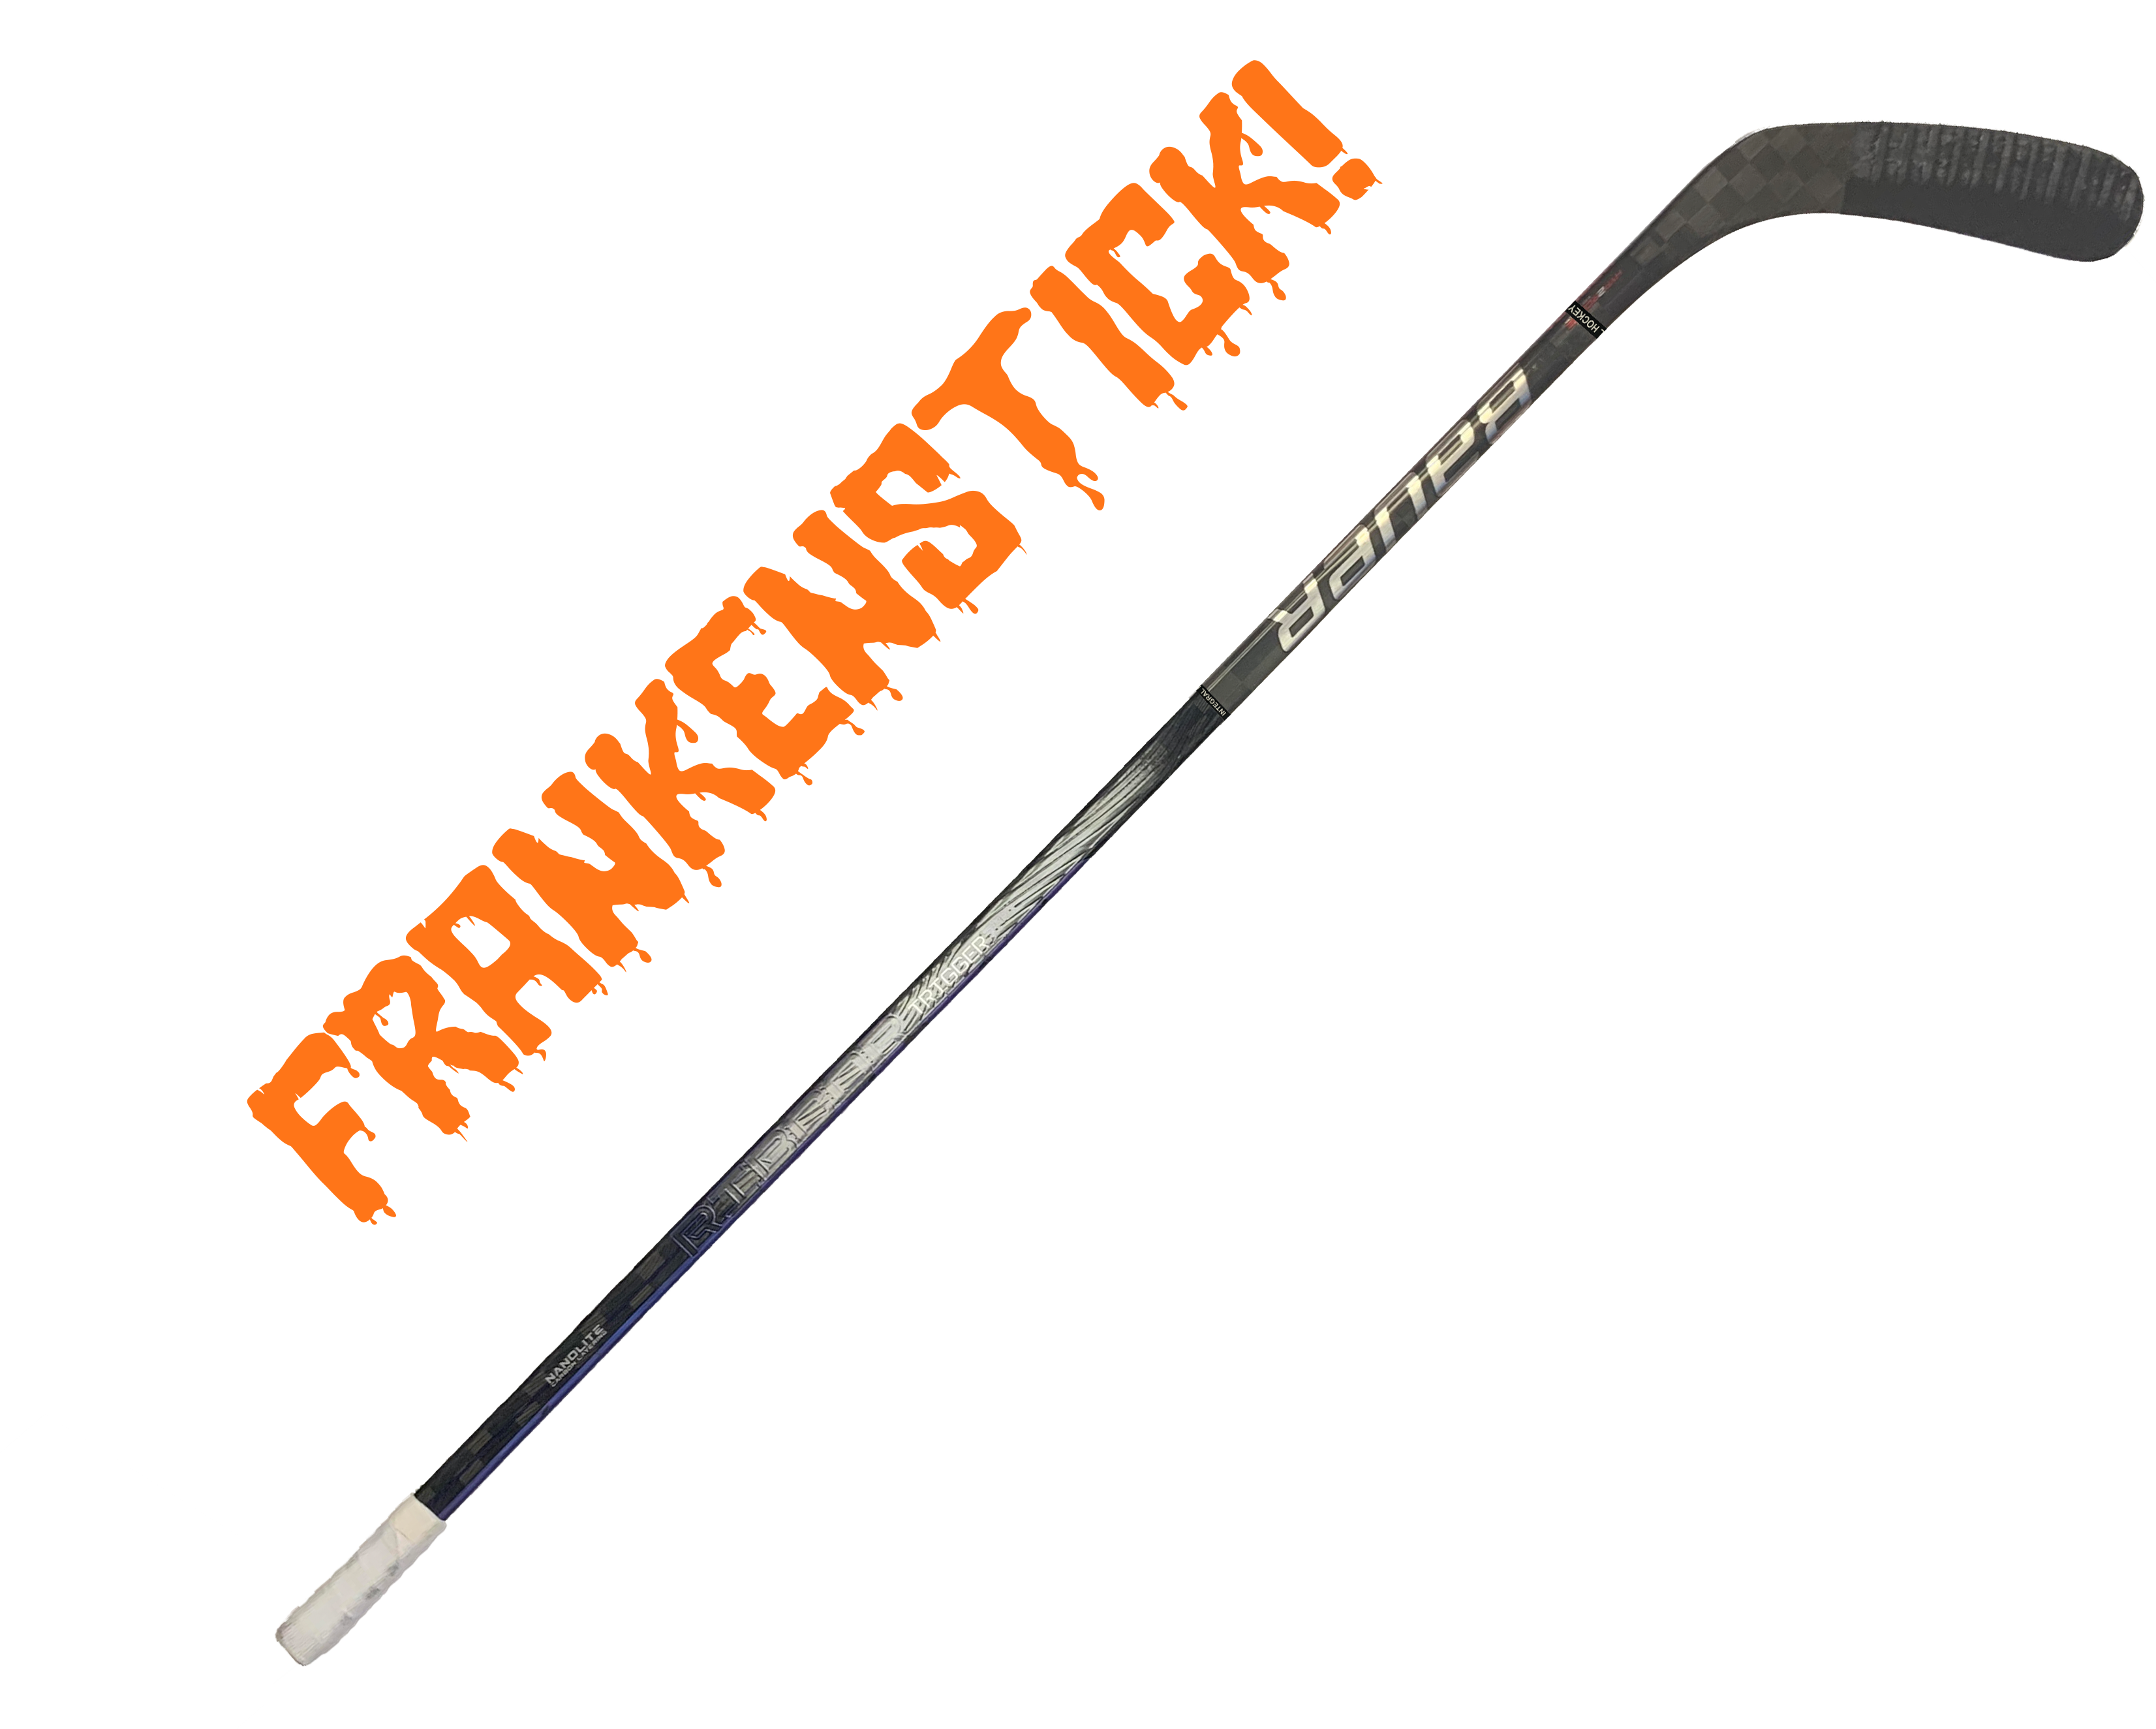 Integral Hockey Stick Sales & Repair